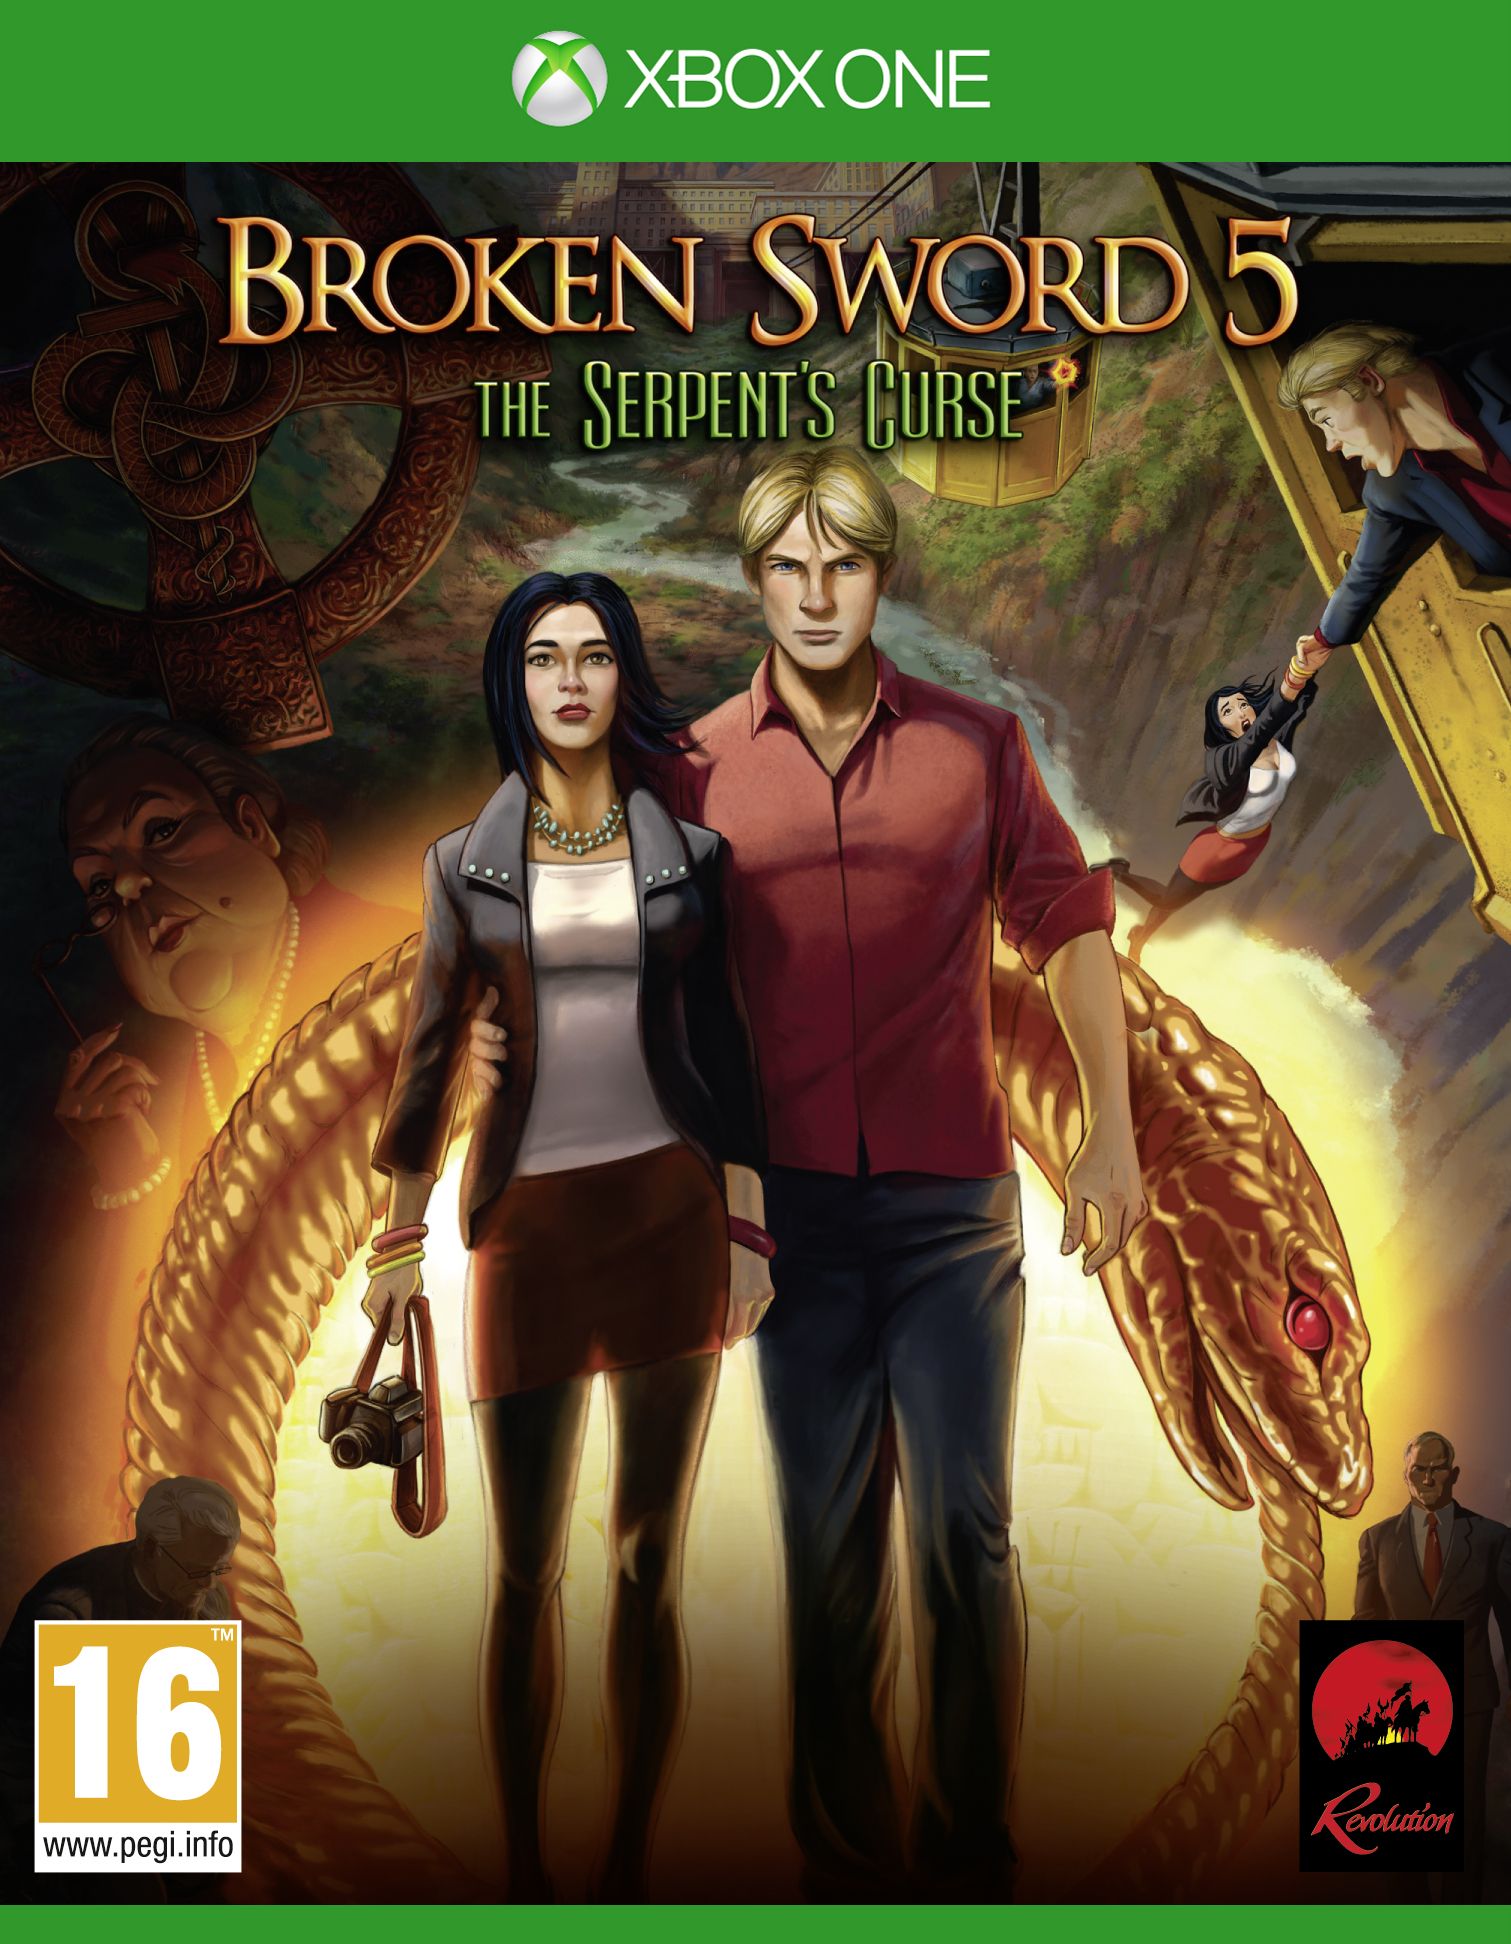 Broken Sword 5: The Serpent's Curse (Xbox One), Revolution Software